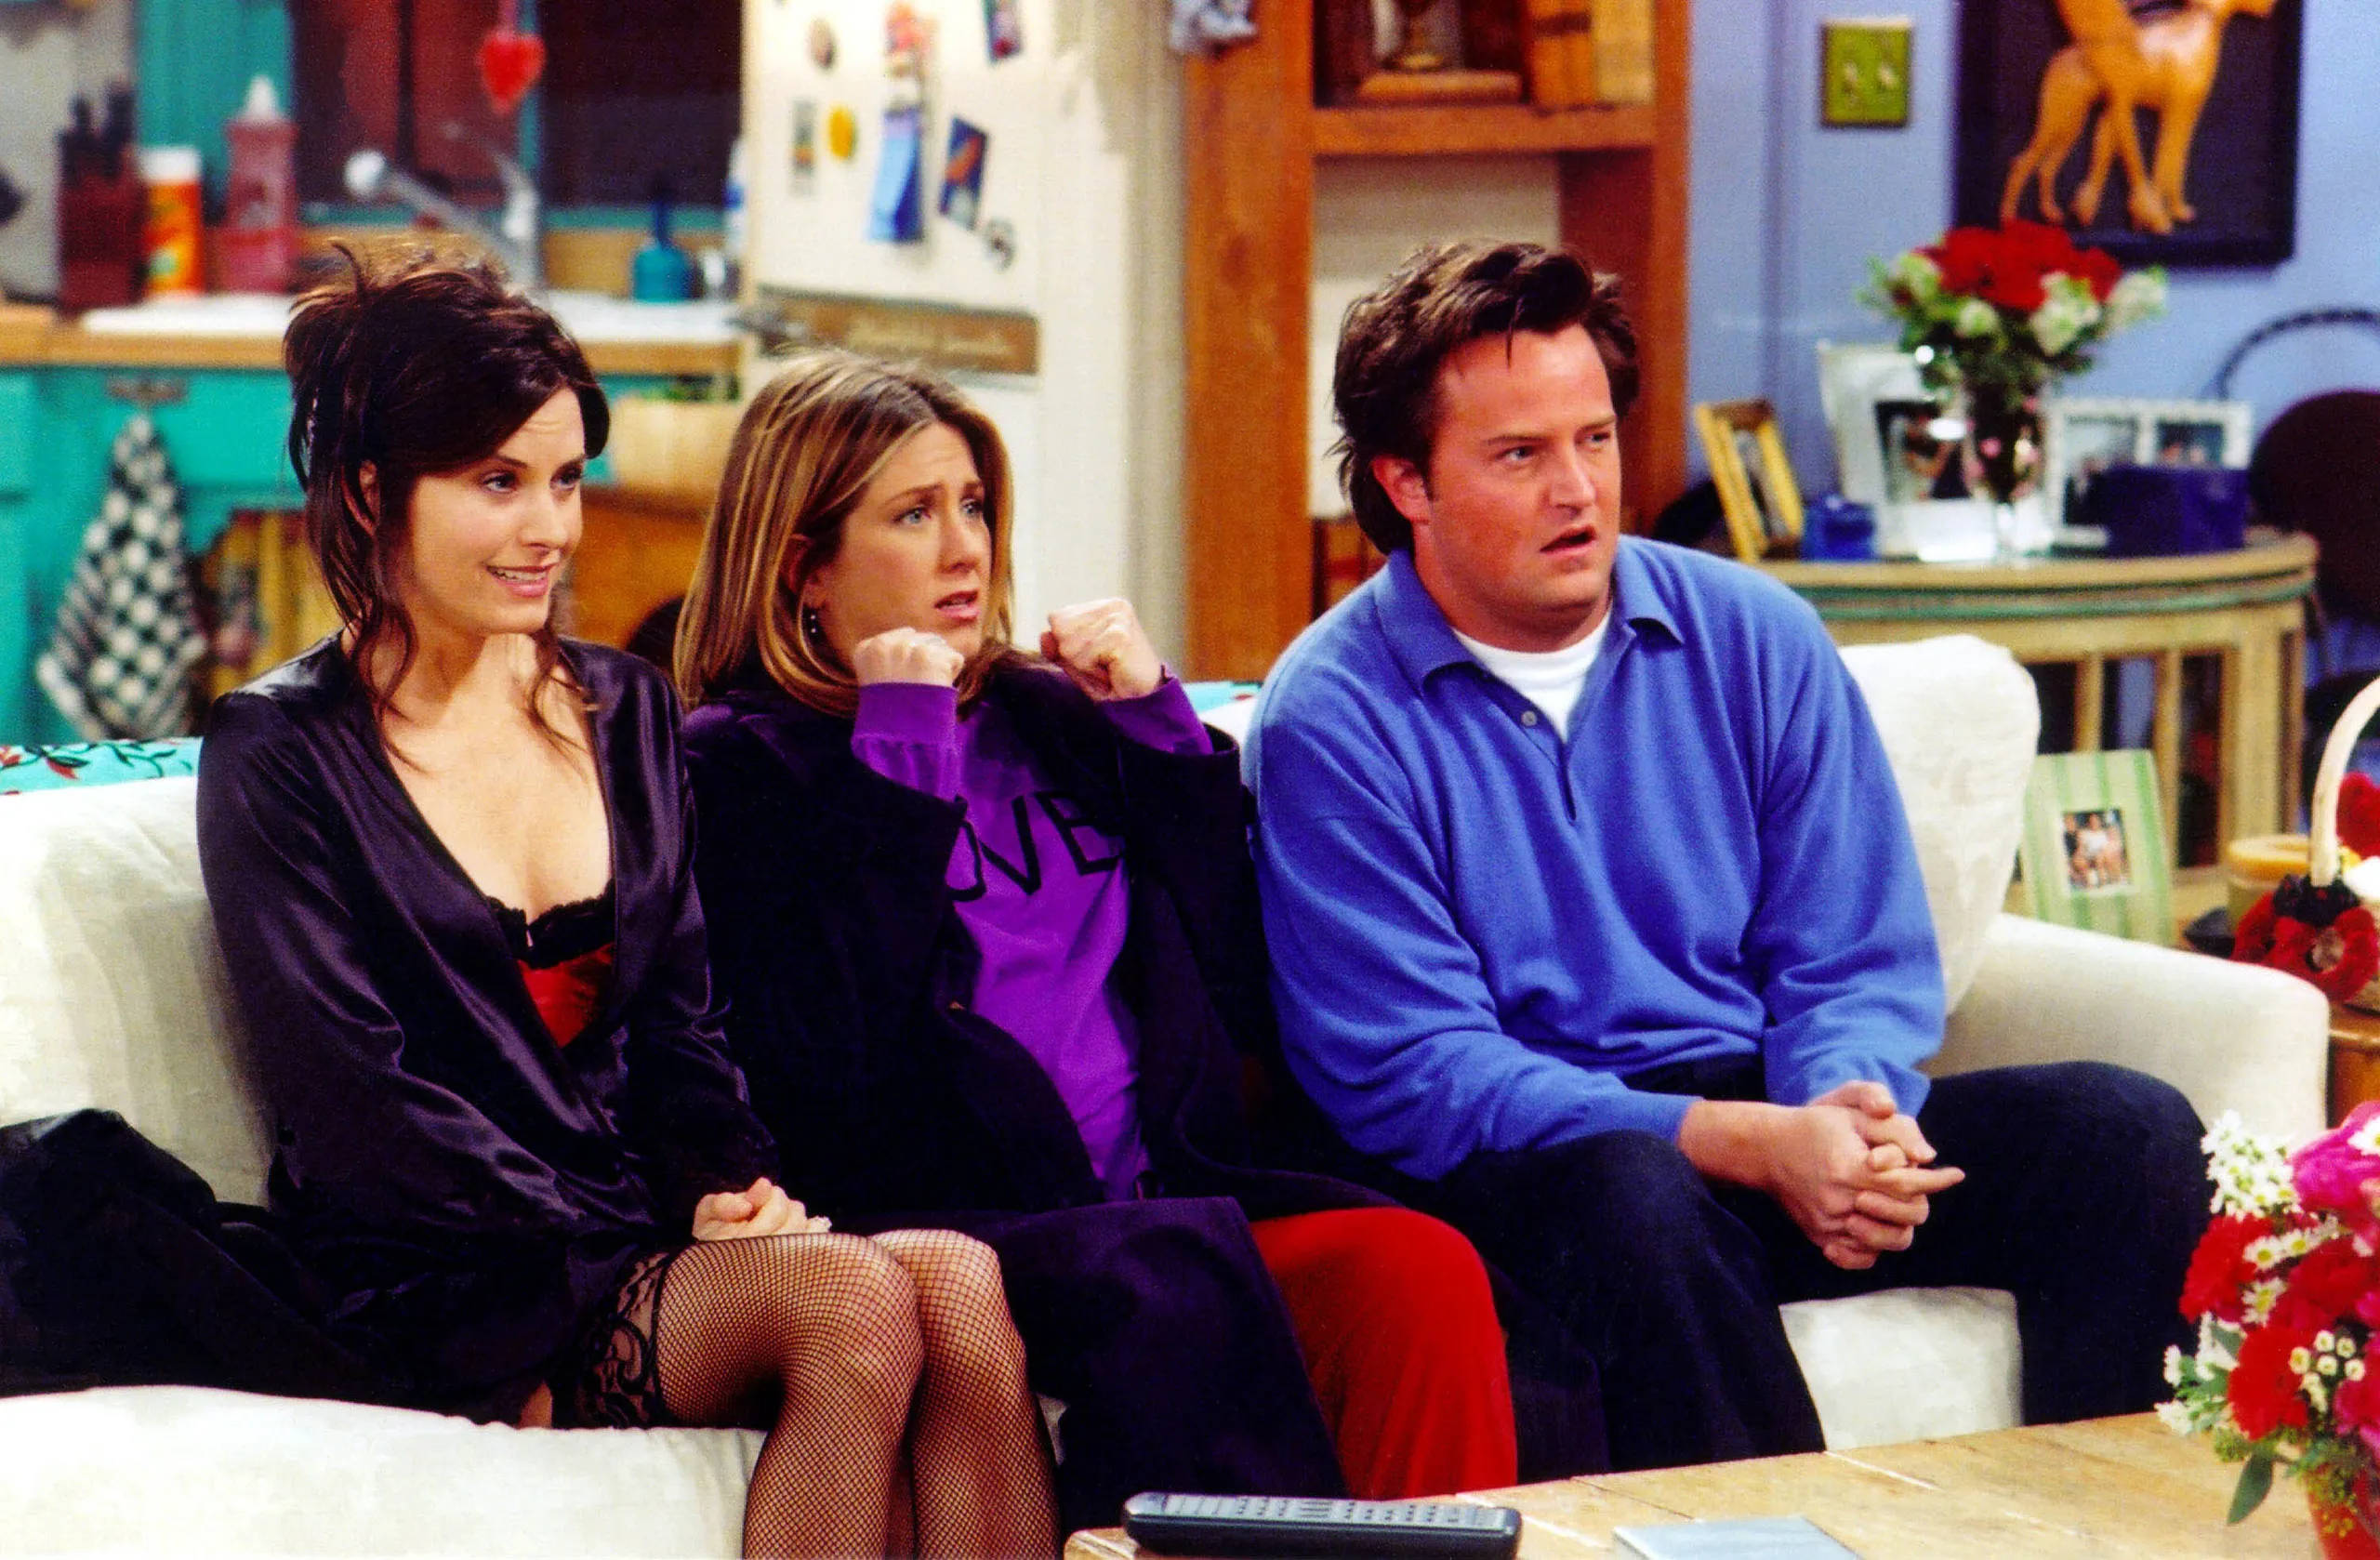 Download Monica, Rachel, And Chandler Friends Tv Show Wallpaper | Wallpapers .com